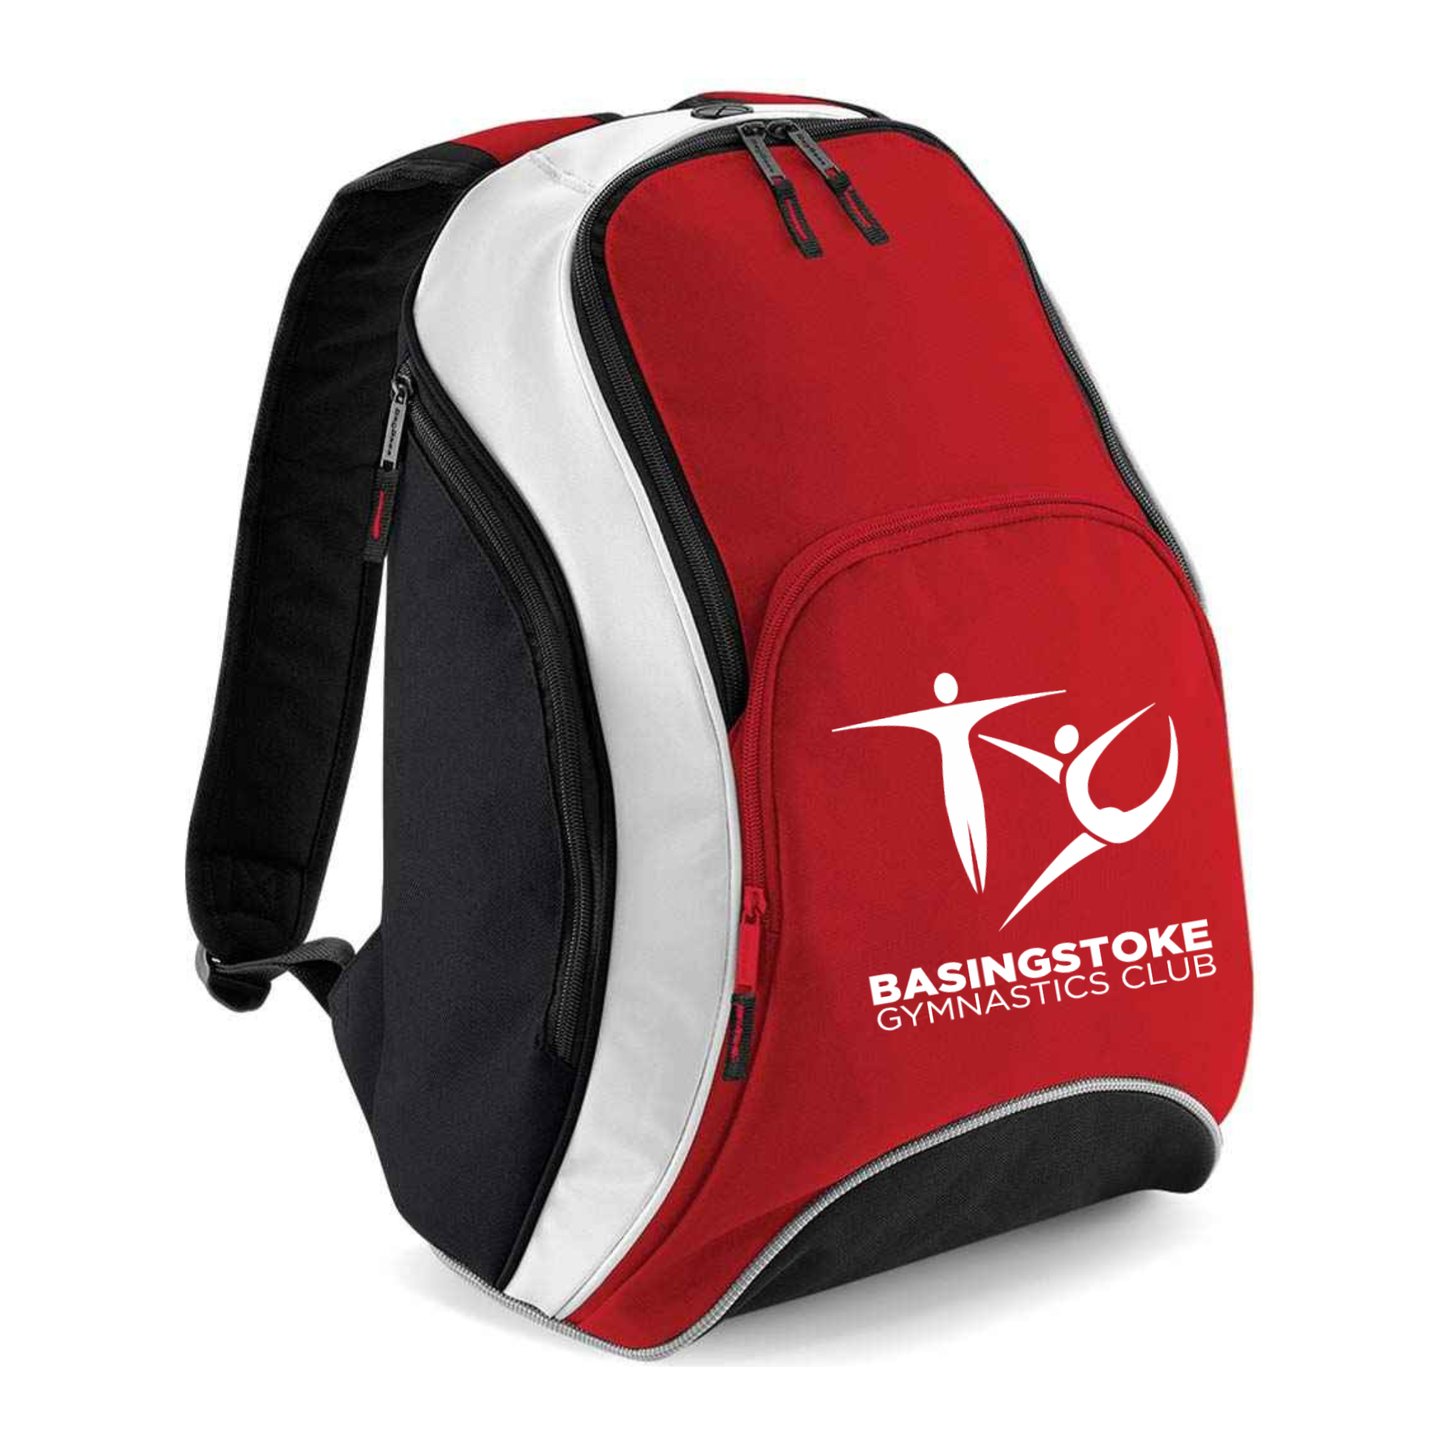 Basingstoke Coach Team Wear Tracksuit, T-Shirt and Bag Bundle Black/Red